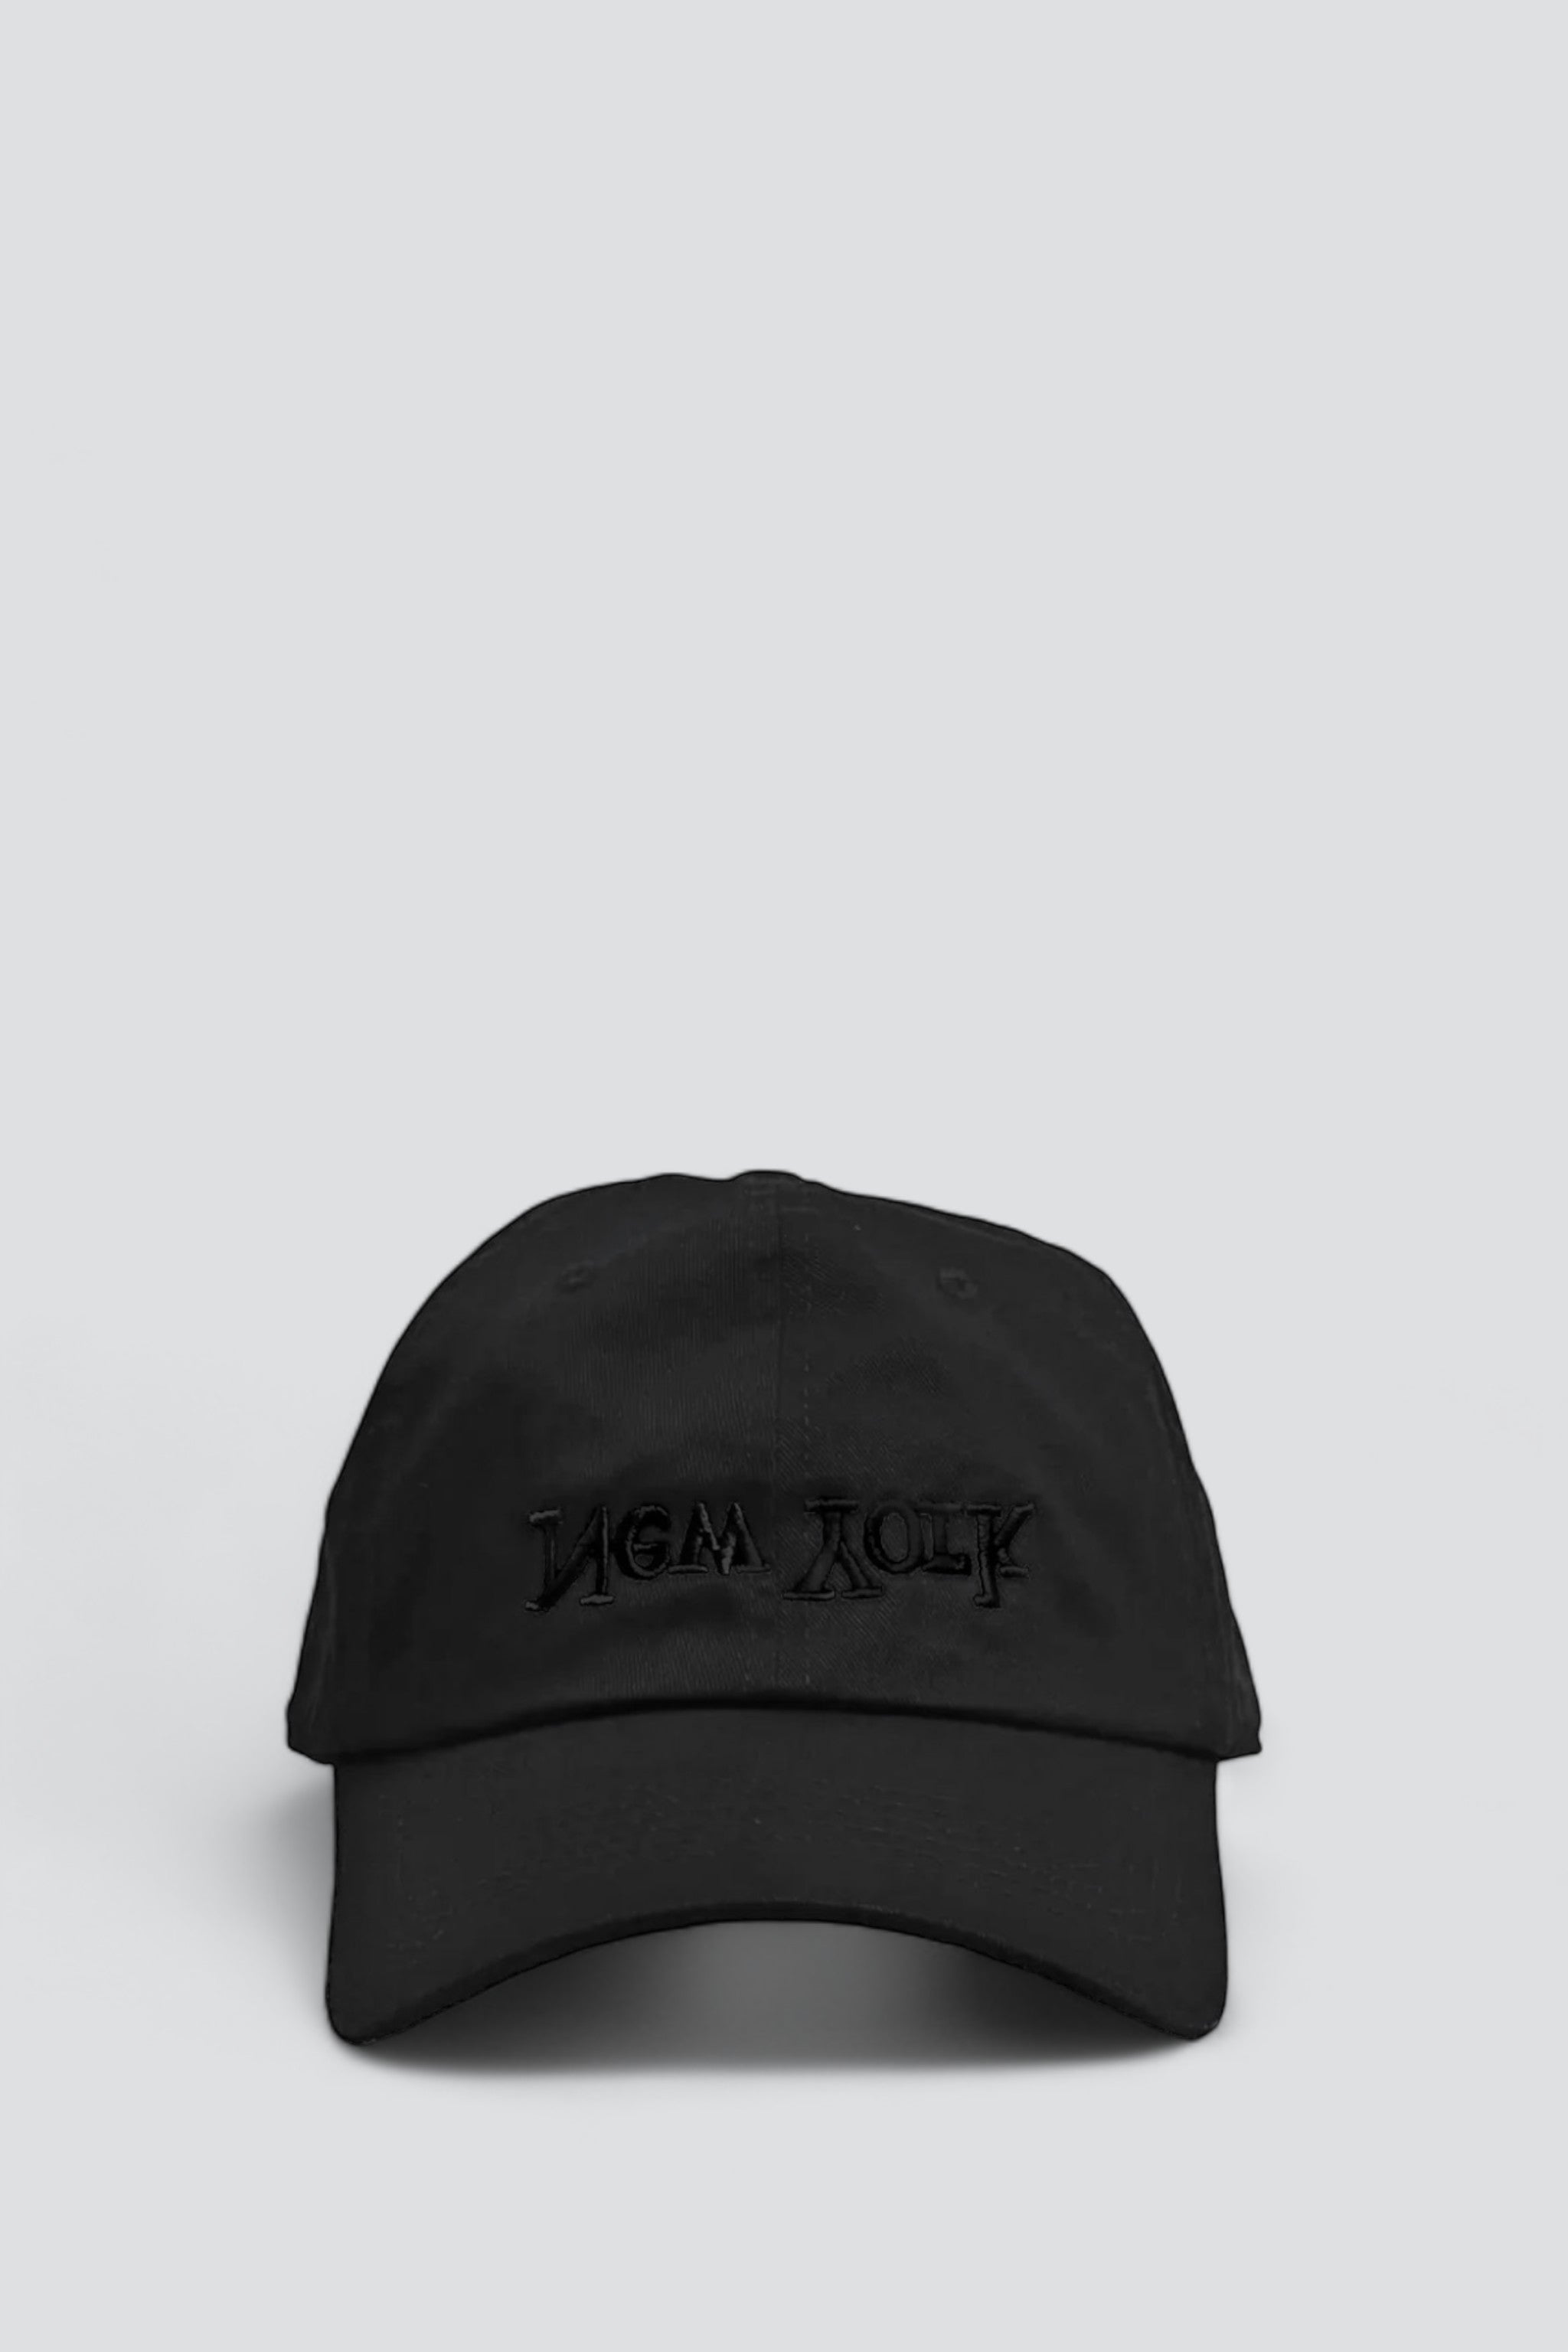 New York Embroidered Hat - Black/Black